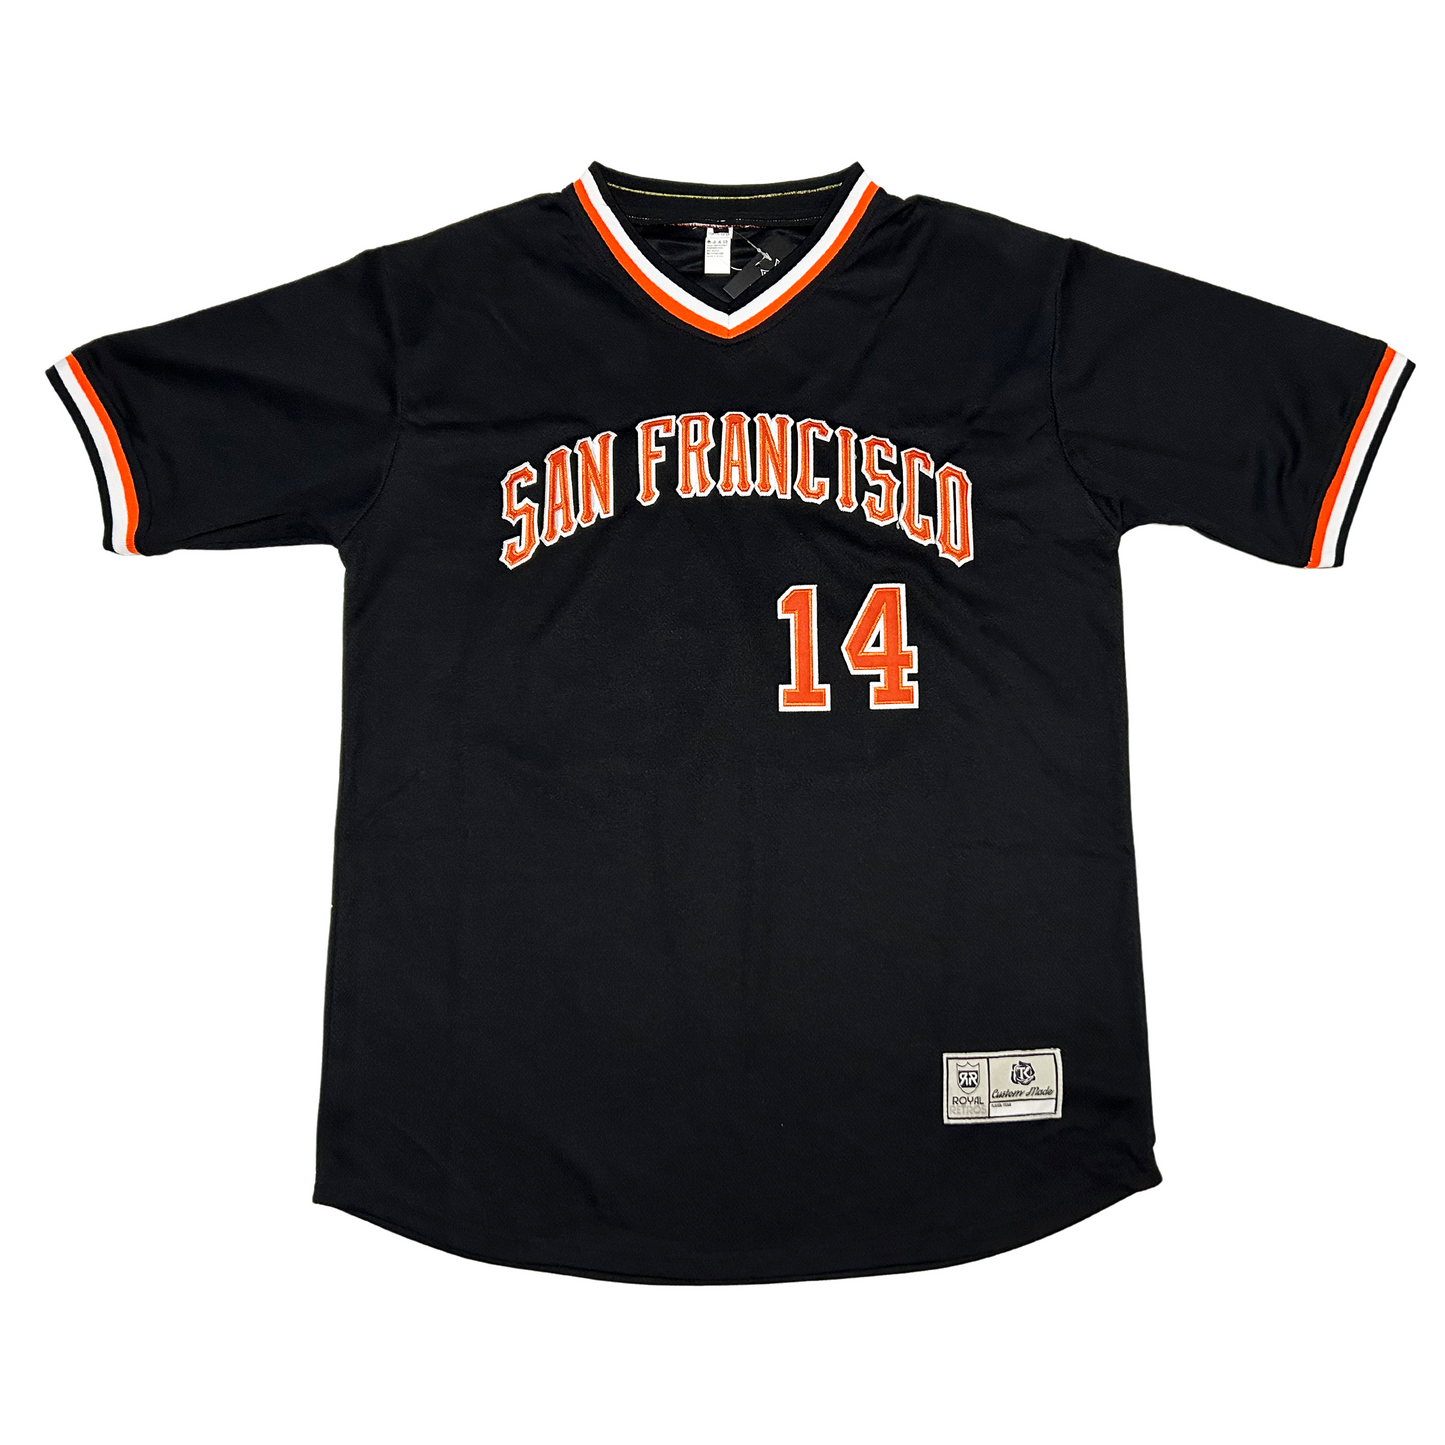 San Francisco Pullover Baseball Jersey